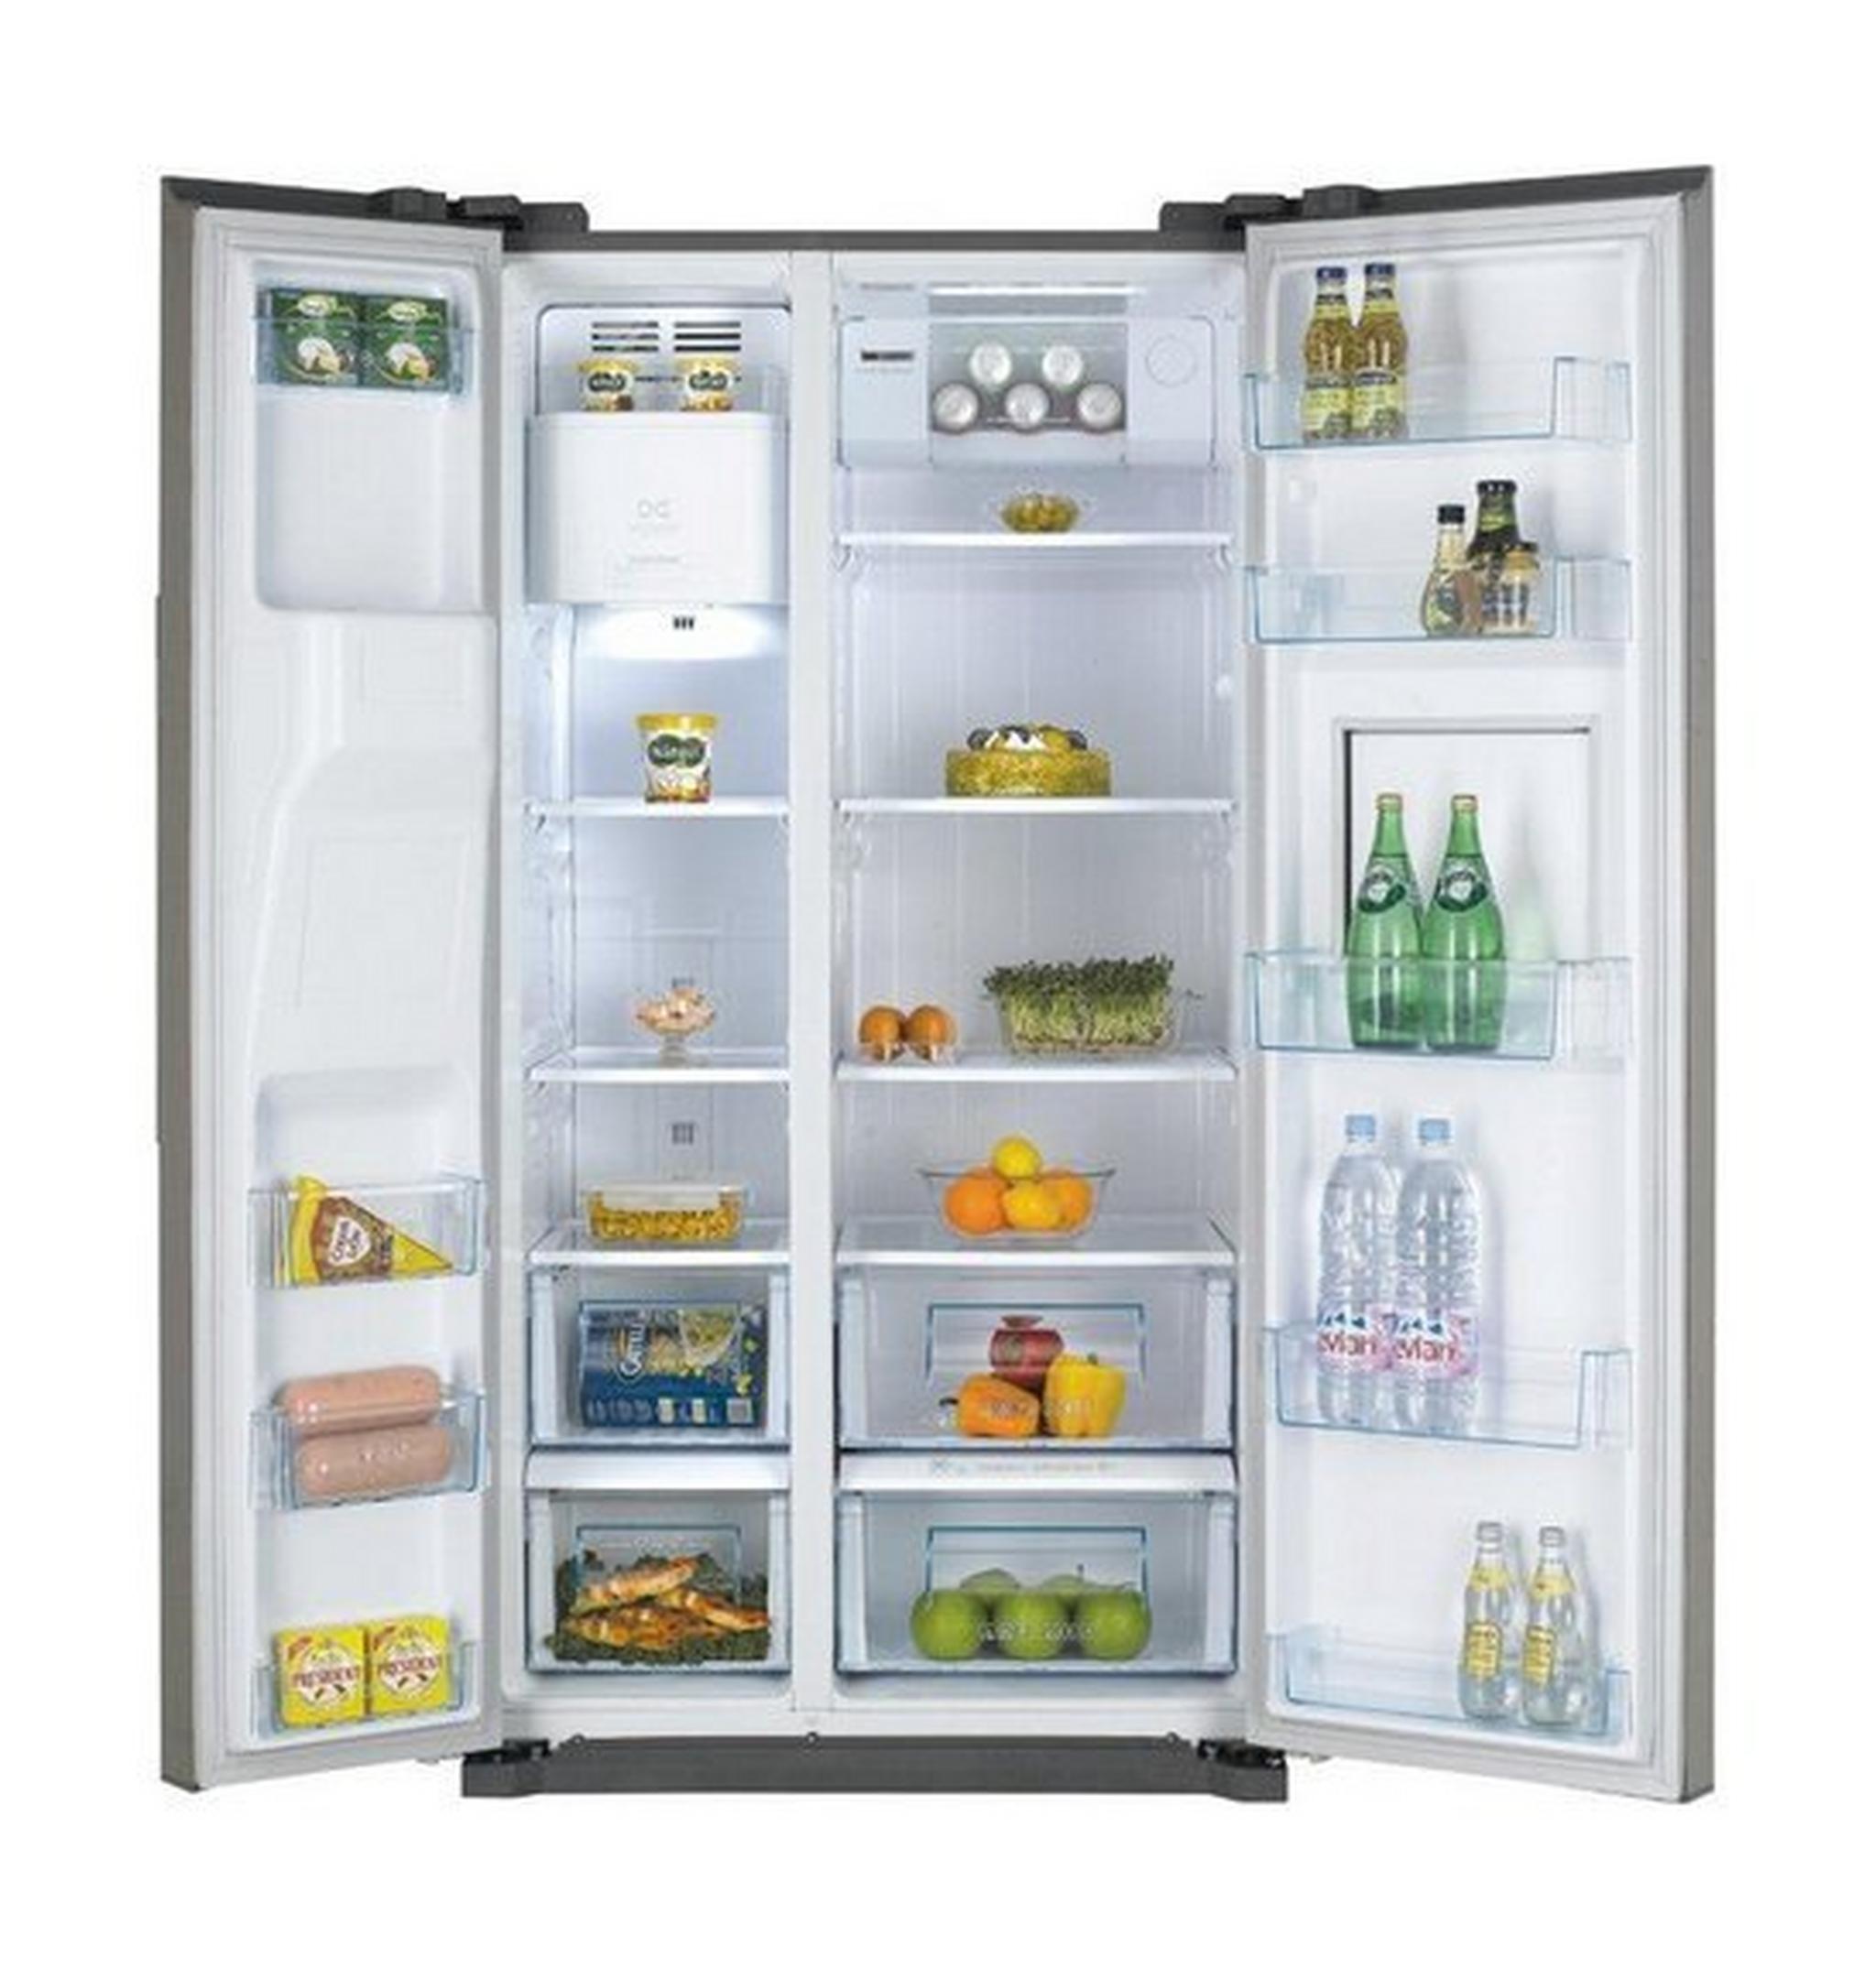 Daewoo 22 Cft. Side By Side Refrigerator (Frs-X22f2) – Inox v